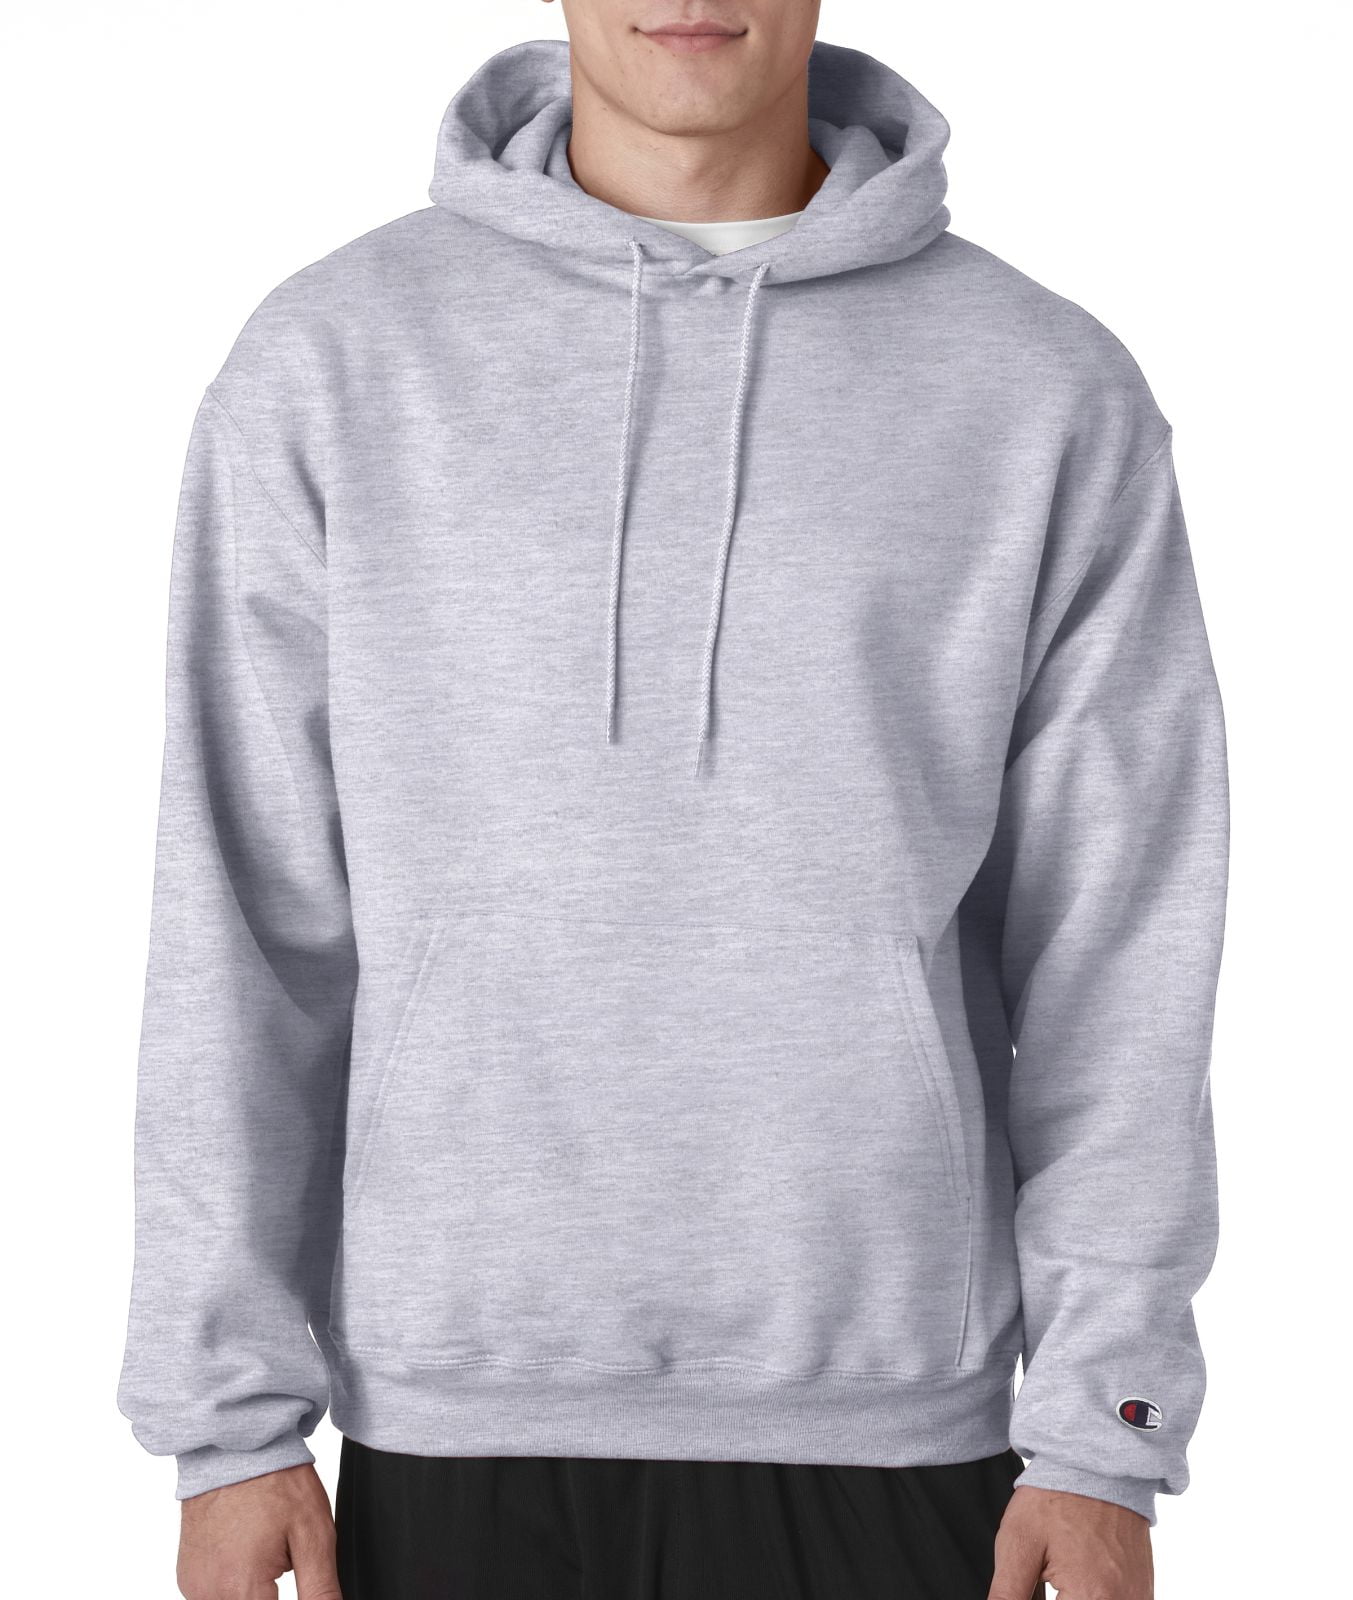 S700 Sweatshirt 9 oz. Pullover -